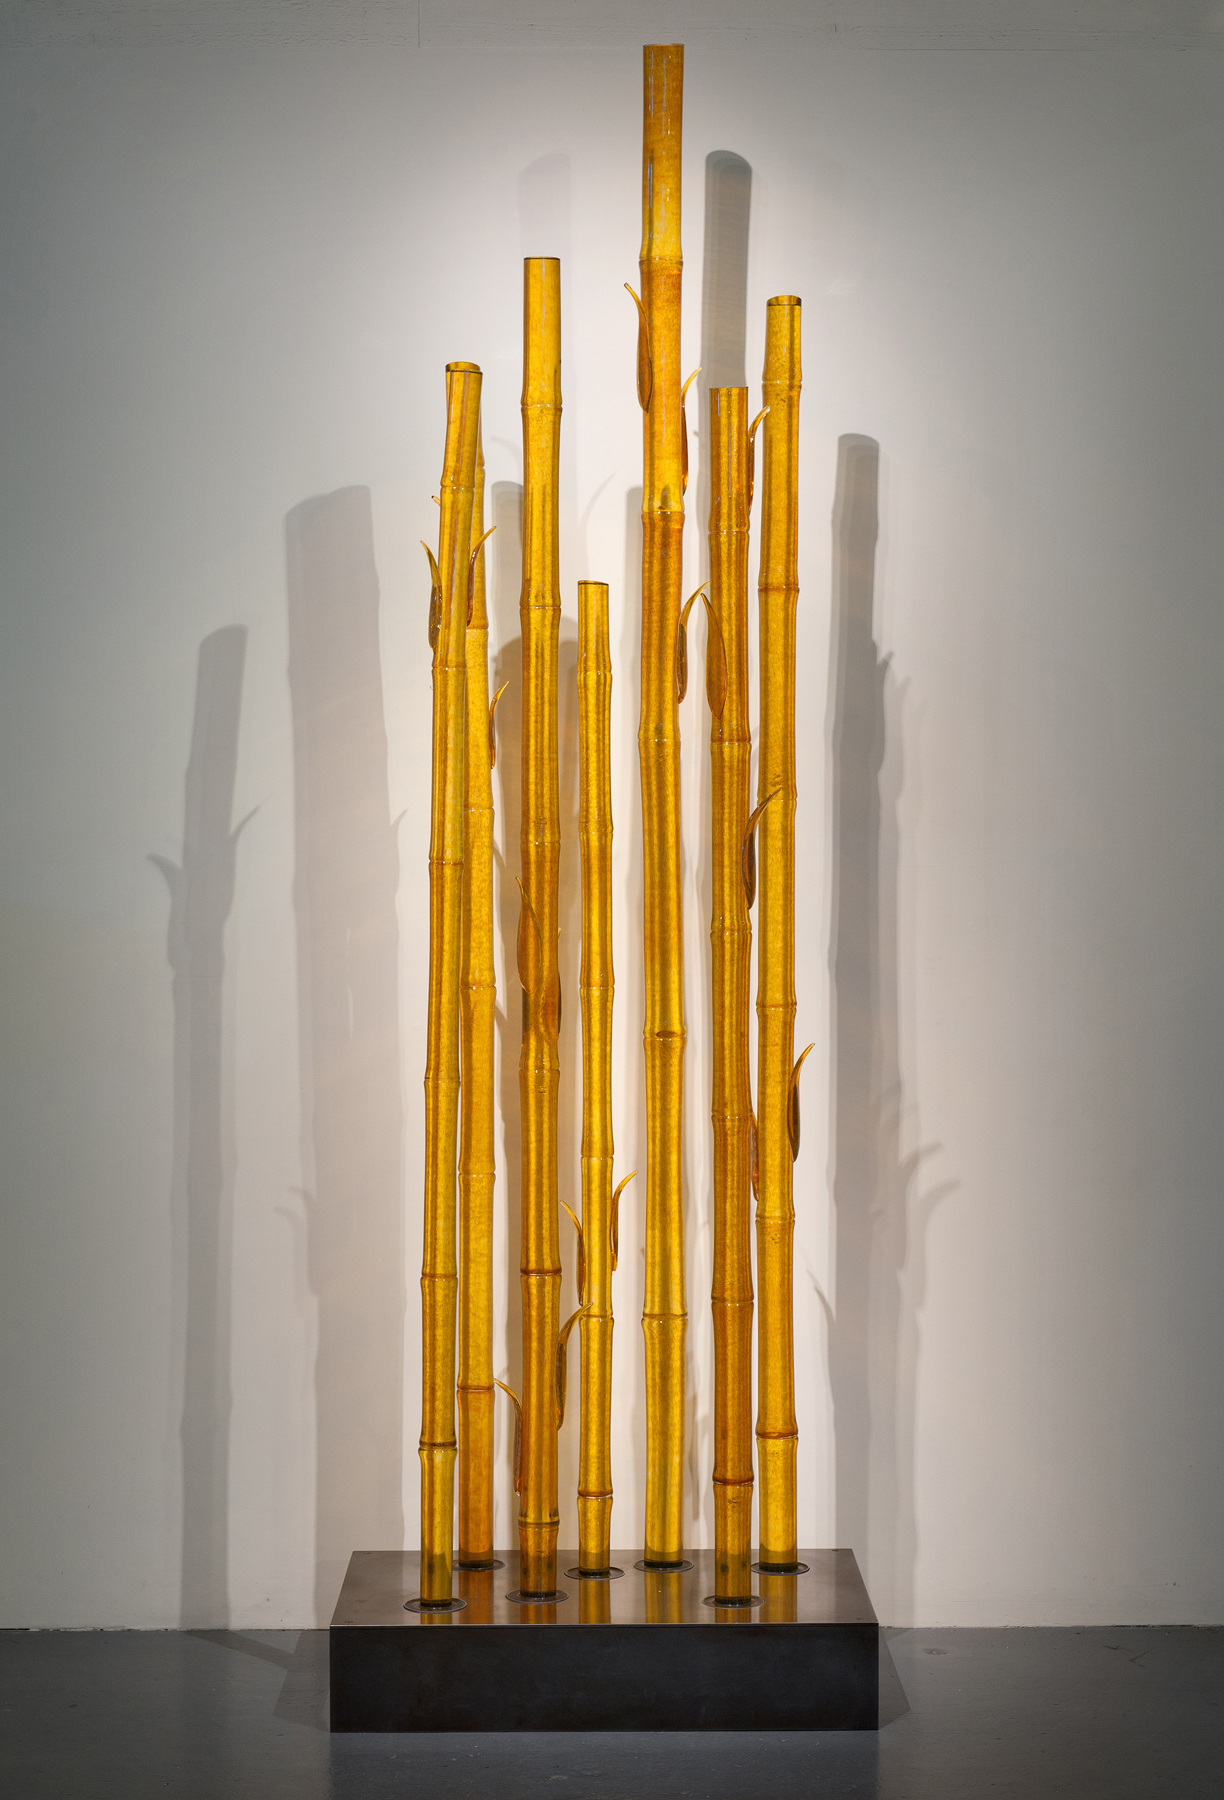 File:Glass Bamboo (3029885478).jpg - Wikimedia Commons